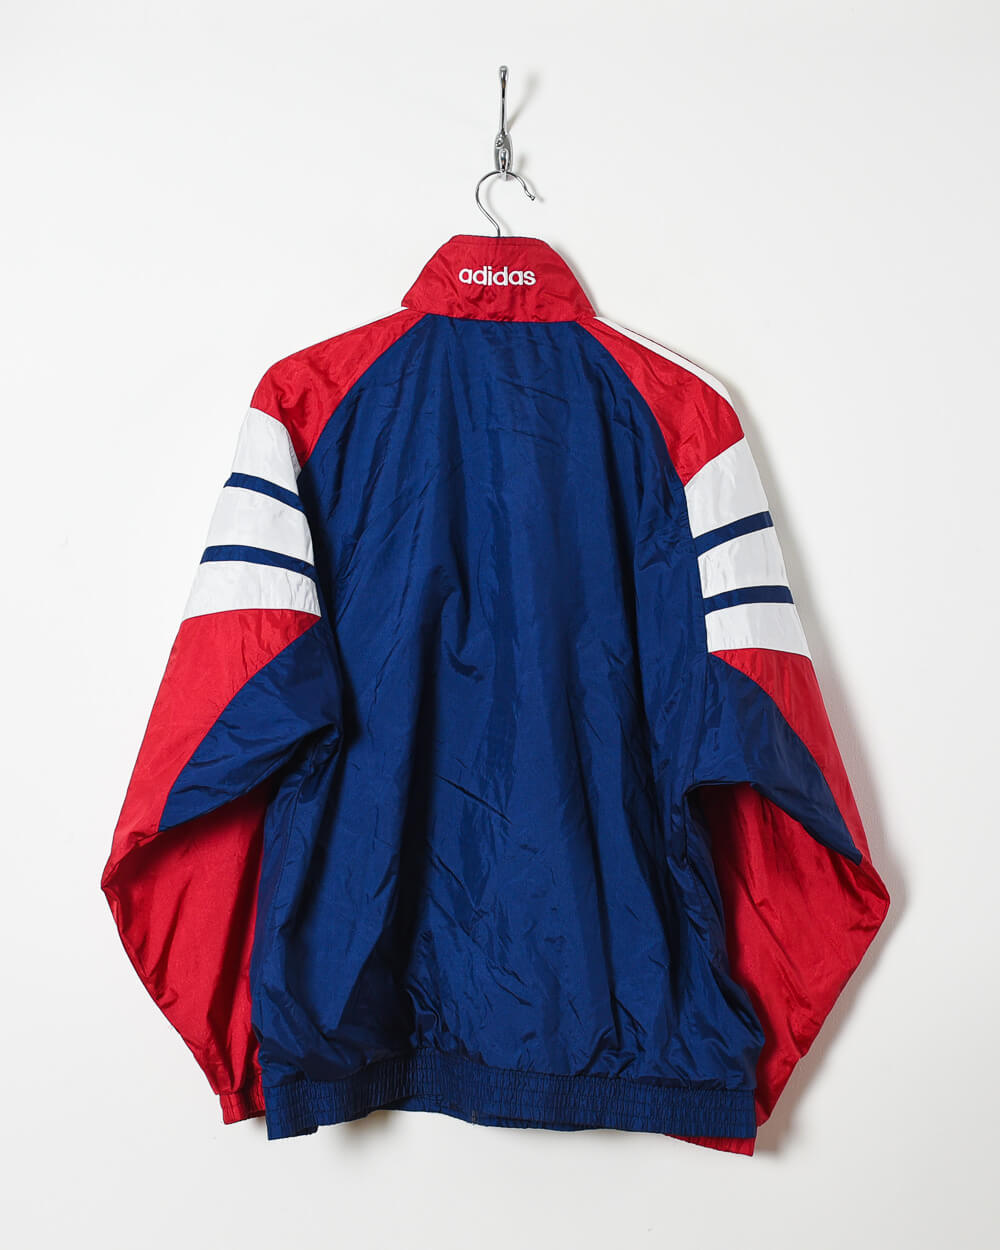 Red Adidas Shell Jacket - Large